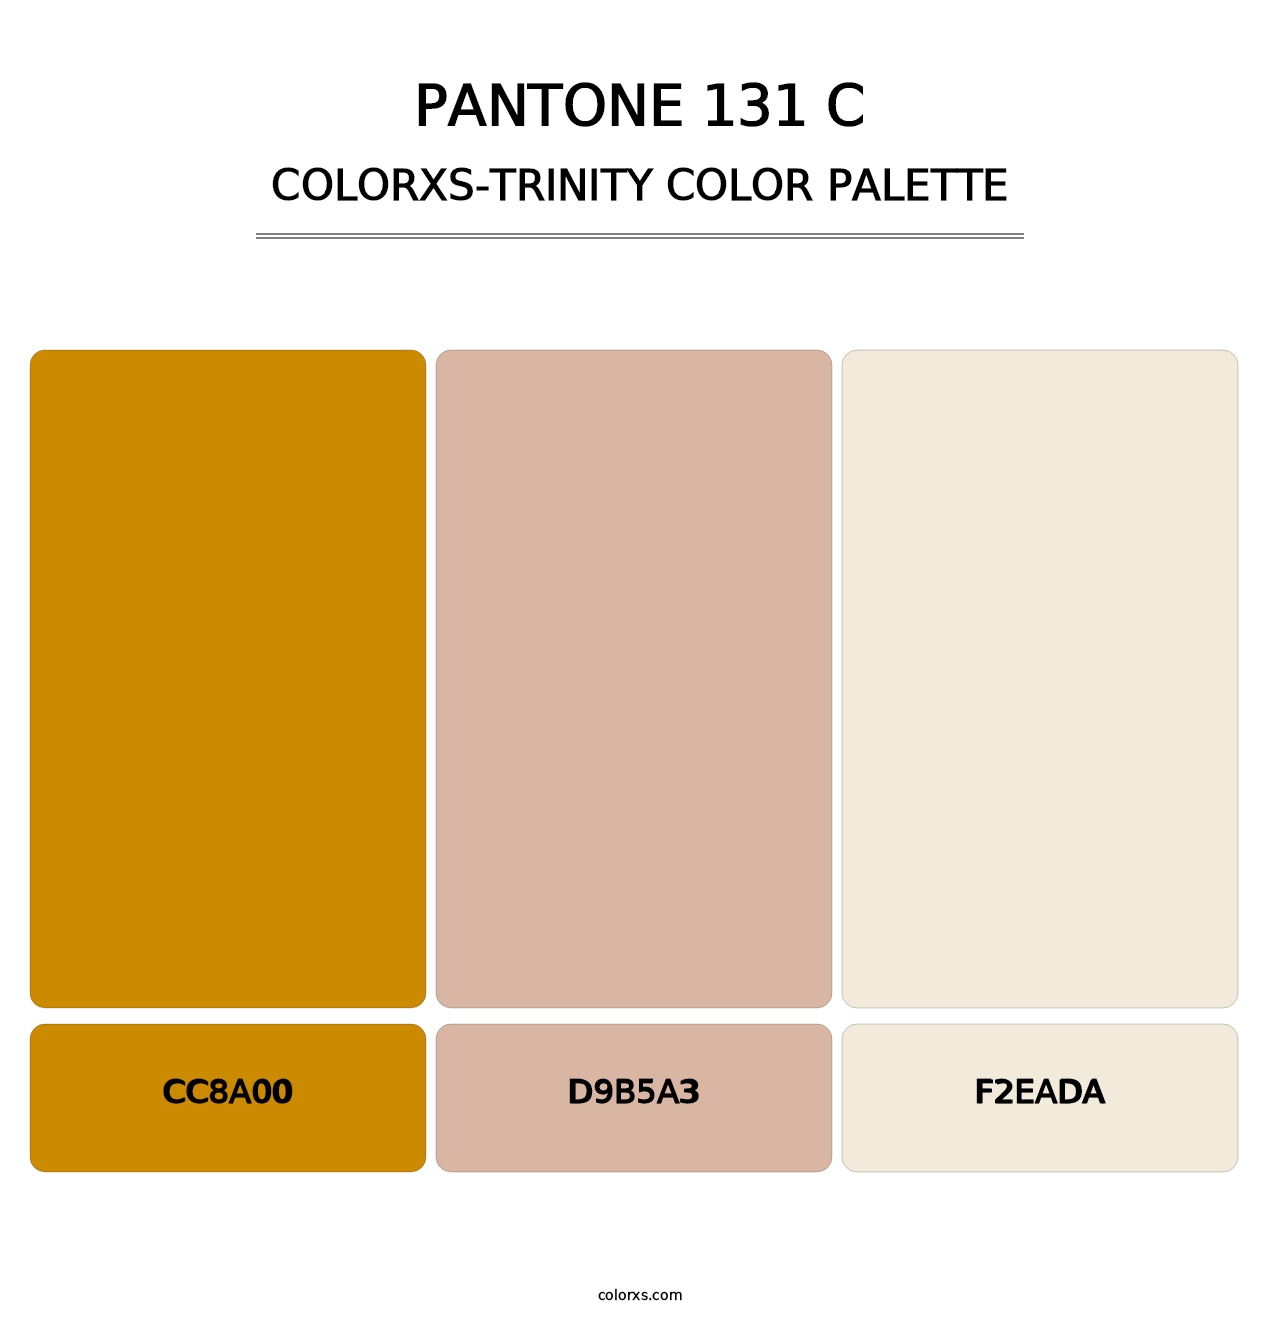 PANTONE 131 C - Colorxs Trinity Palette